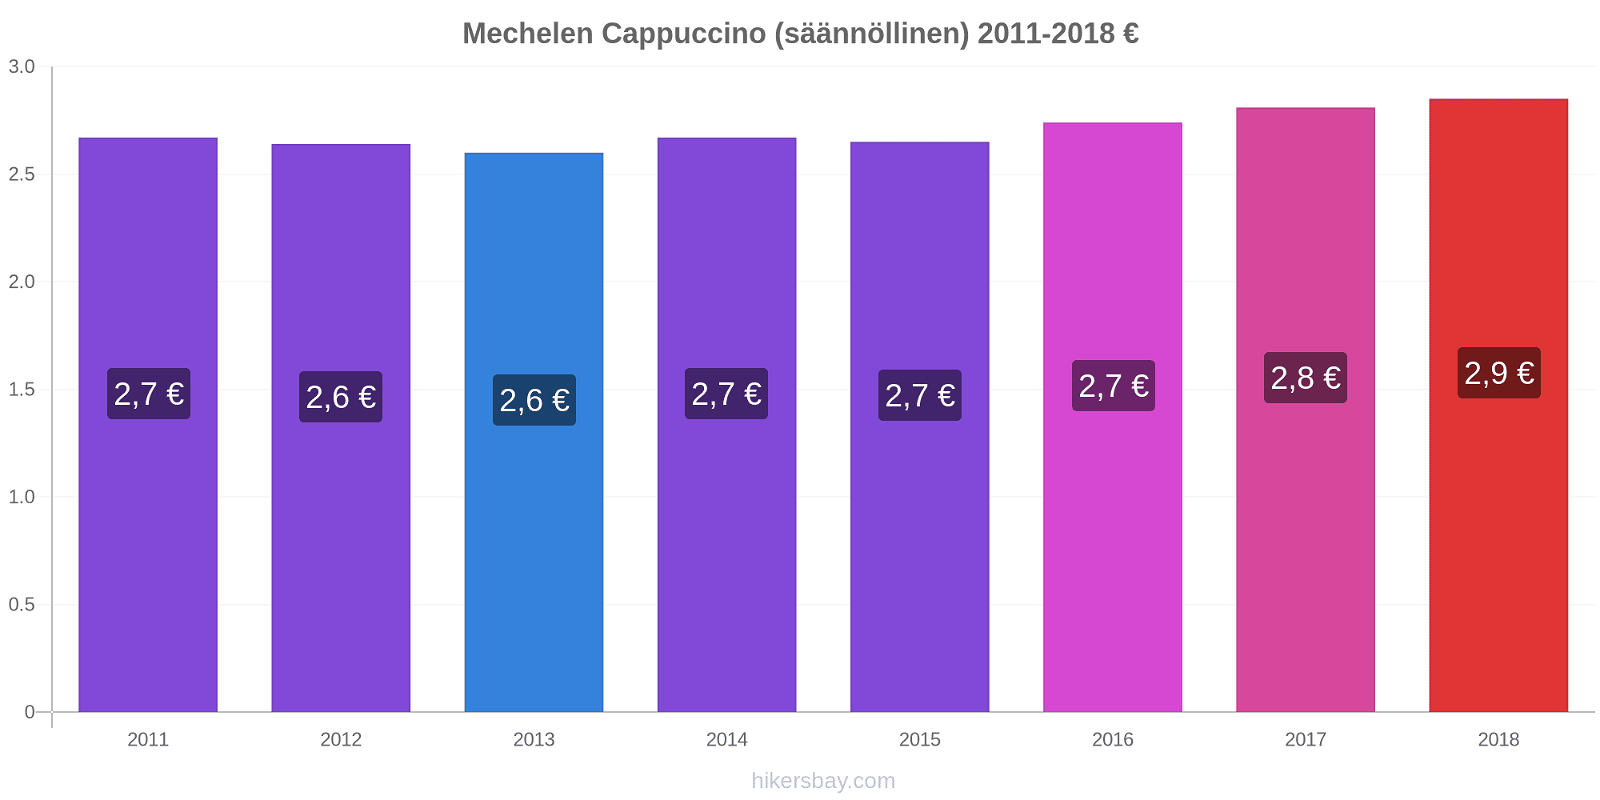 Mechelen hintojen muutokset Cappuccino (säännöllinen) hikersbay.com